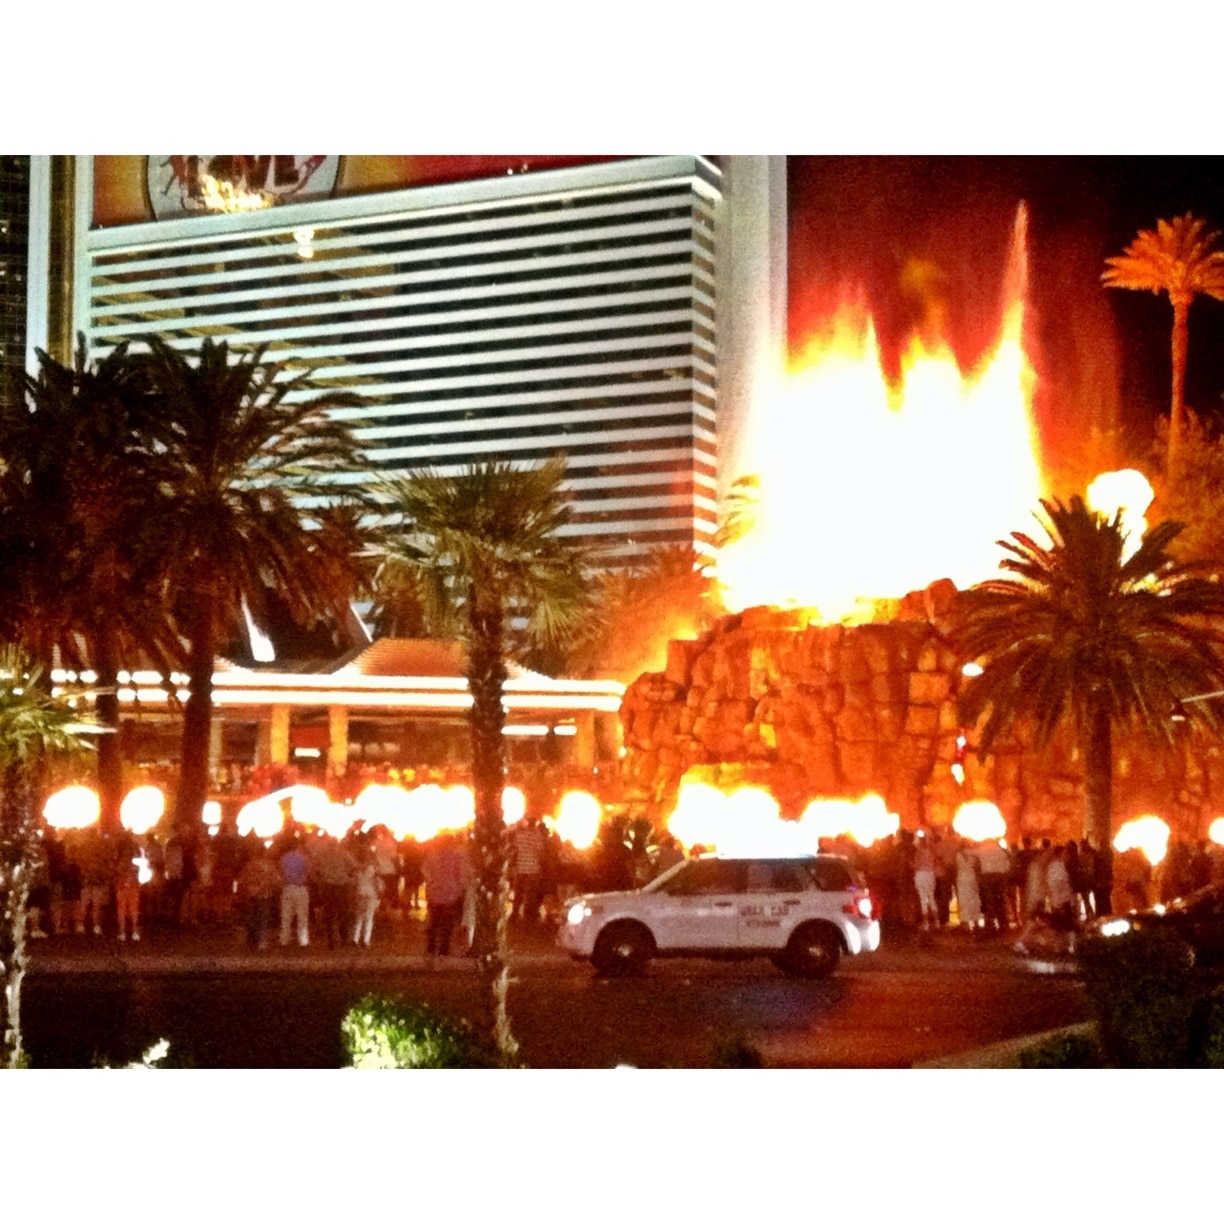 Denny's - Las Vegas Boulevard in Las Vegas: 5 reviews and 3 photos